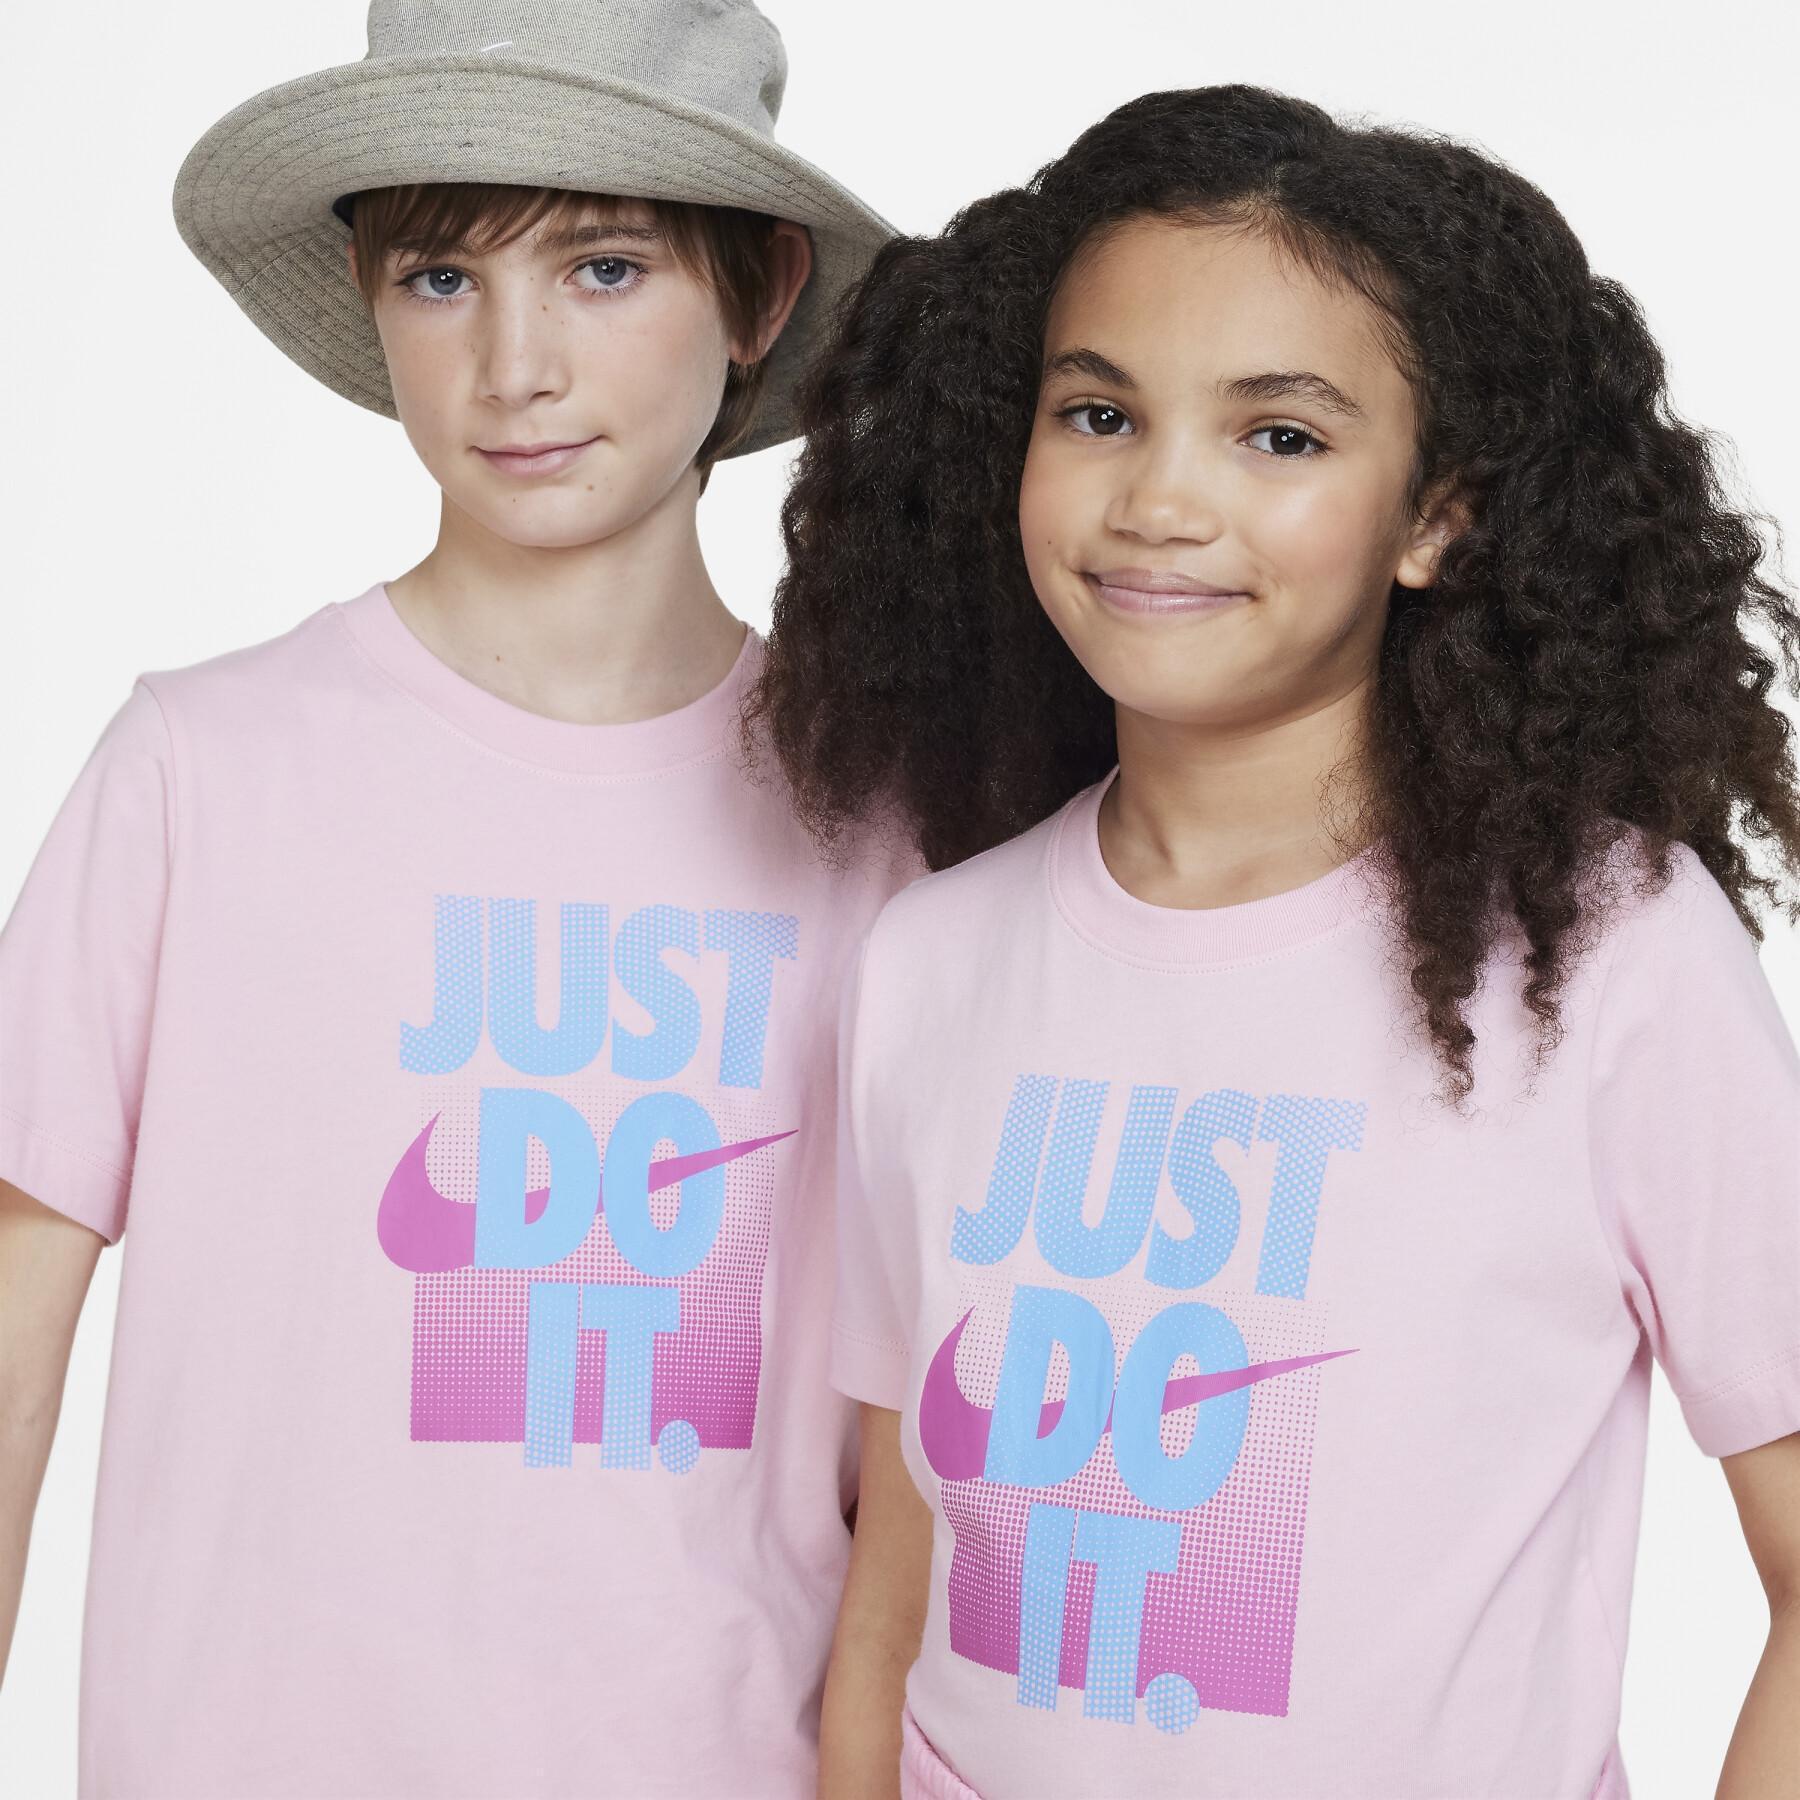 Koszulka dla dzieci Nike Core Brandmark 1